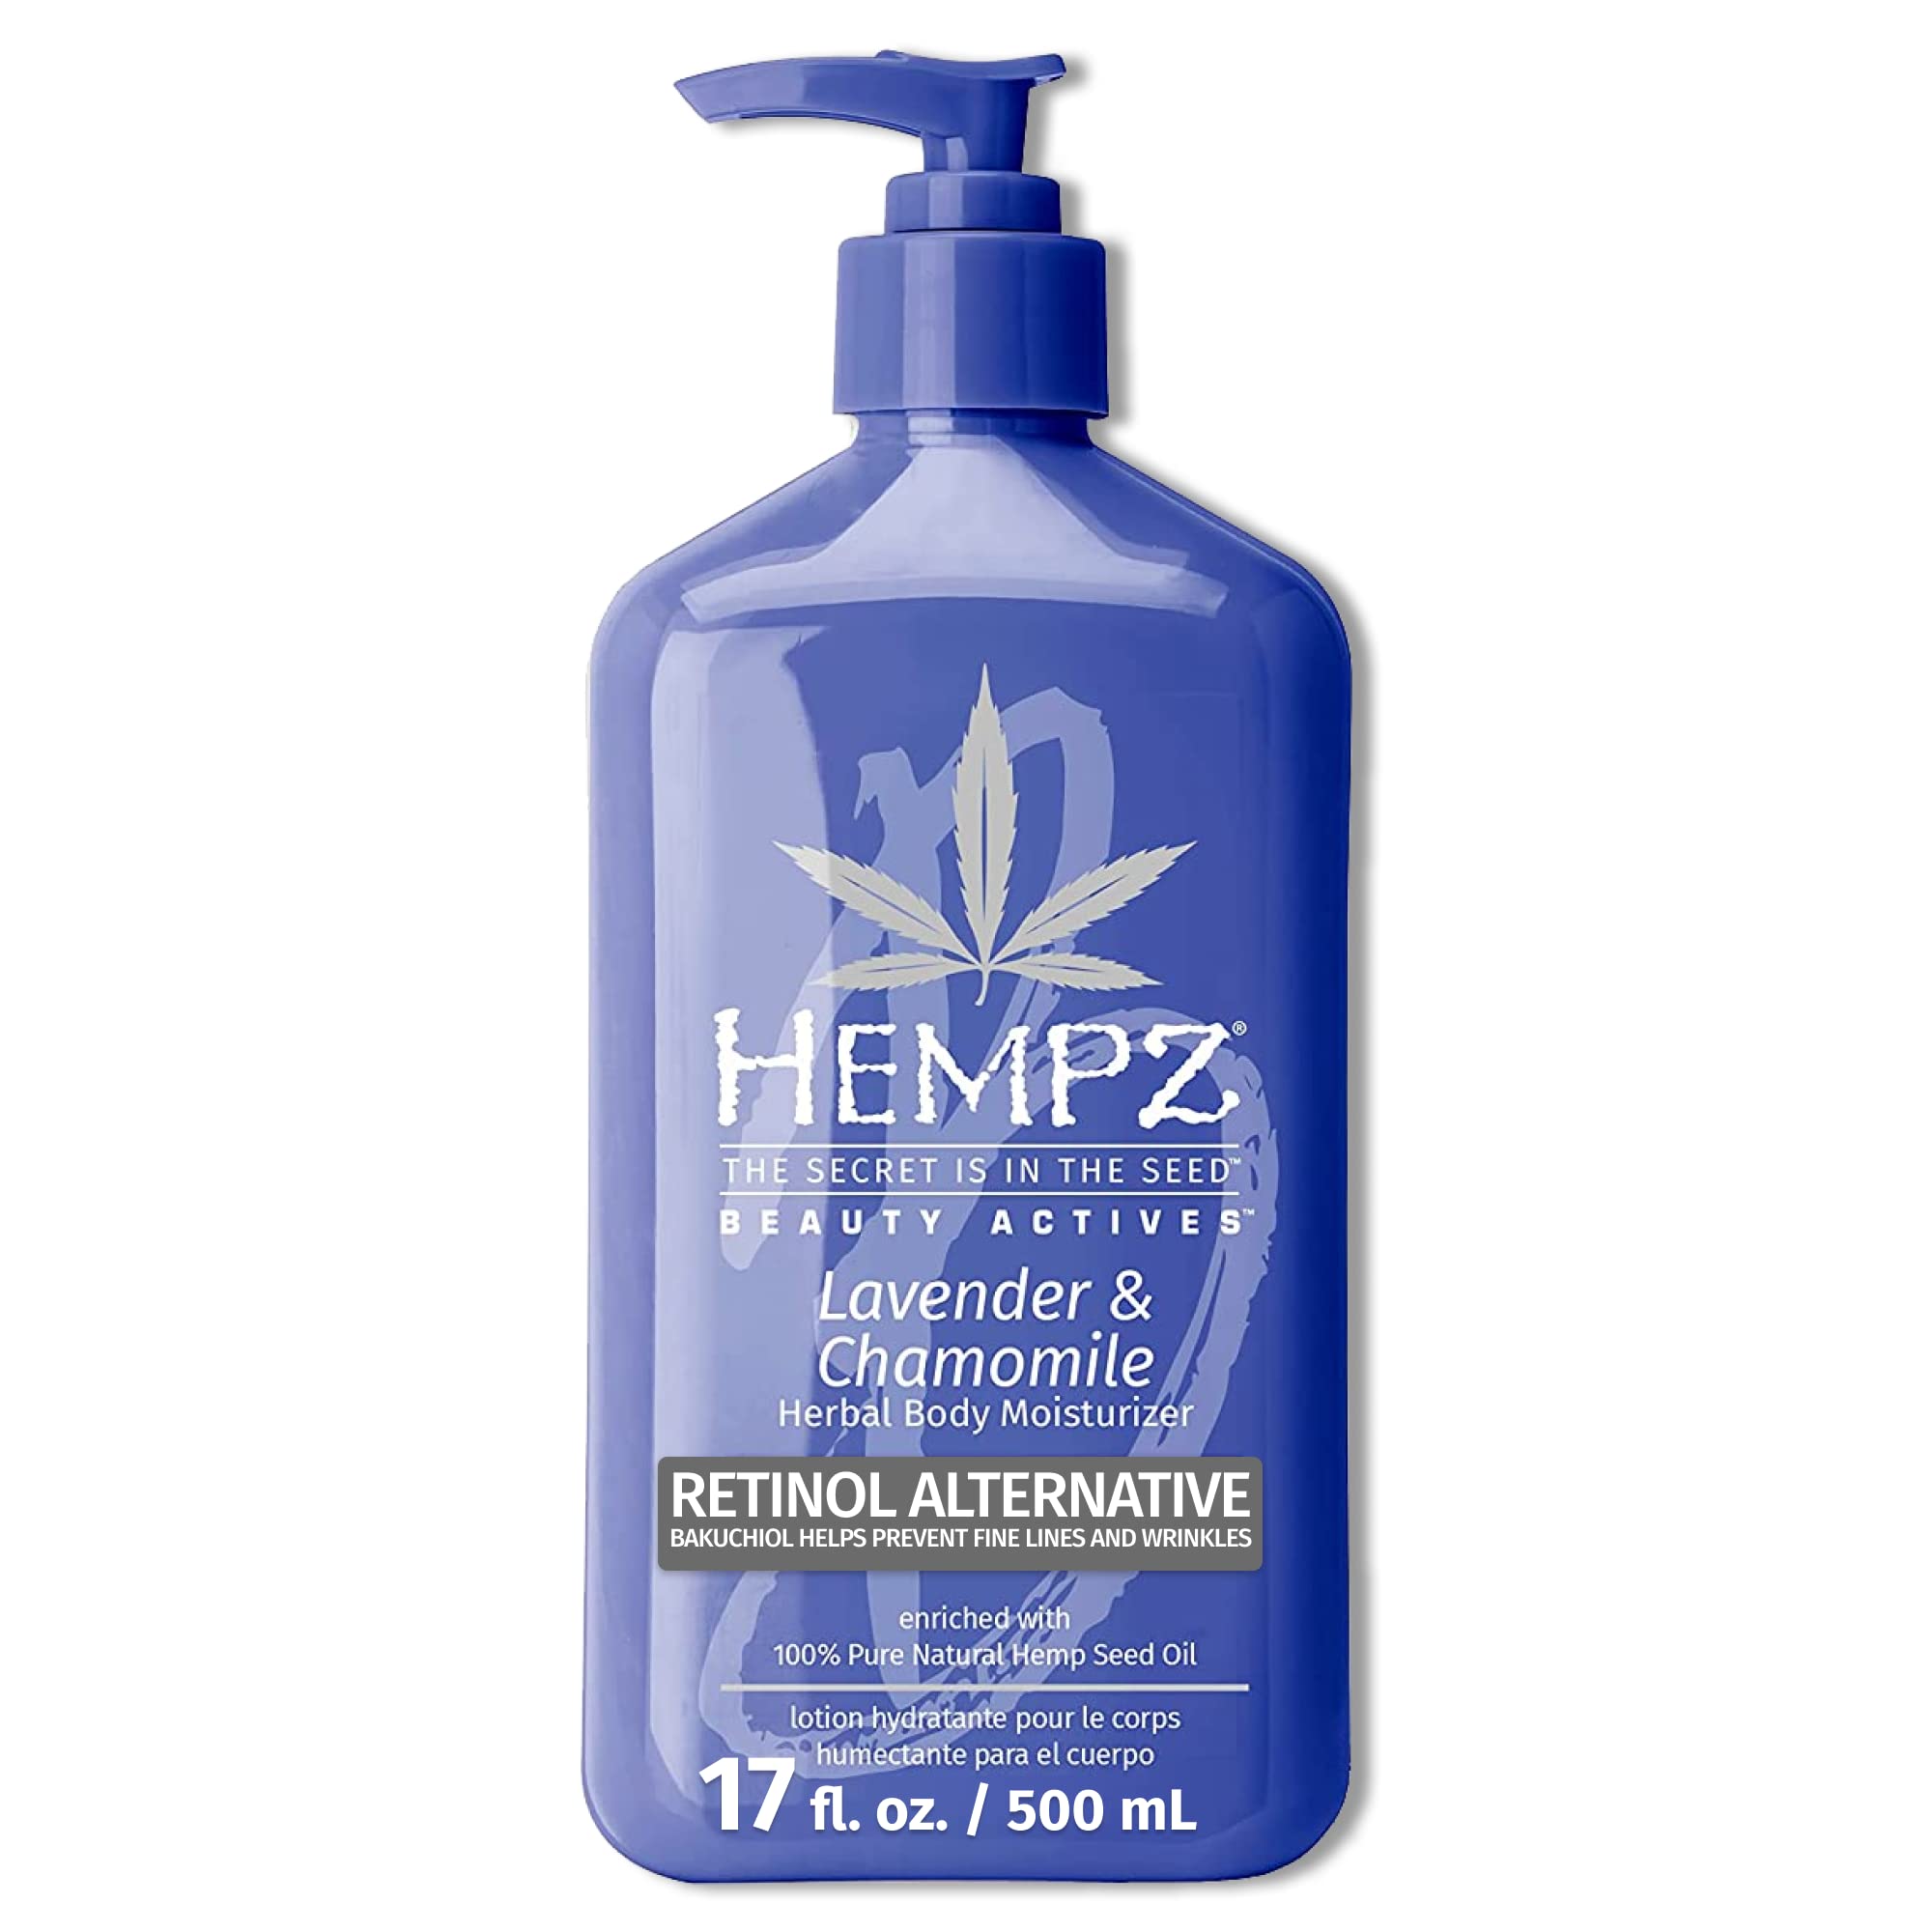 Hempz Body Lotion - Lavender & Chamomile Herbal Limited Edition Daily Moisturizing Cream, Shea Butter, Aloe, Lavender Extract Body Moisturizer - Skin Care Products, Hemp Seed Oil - 17 Fl Oz…